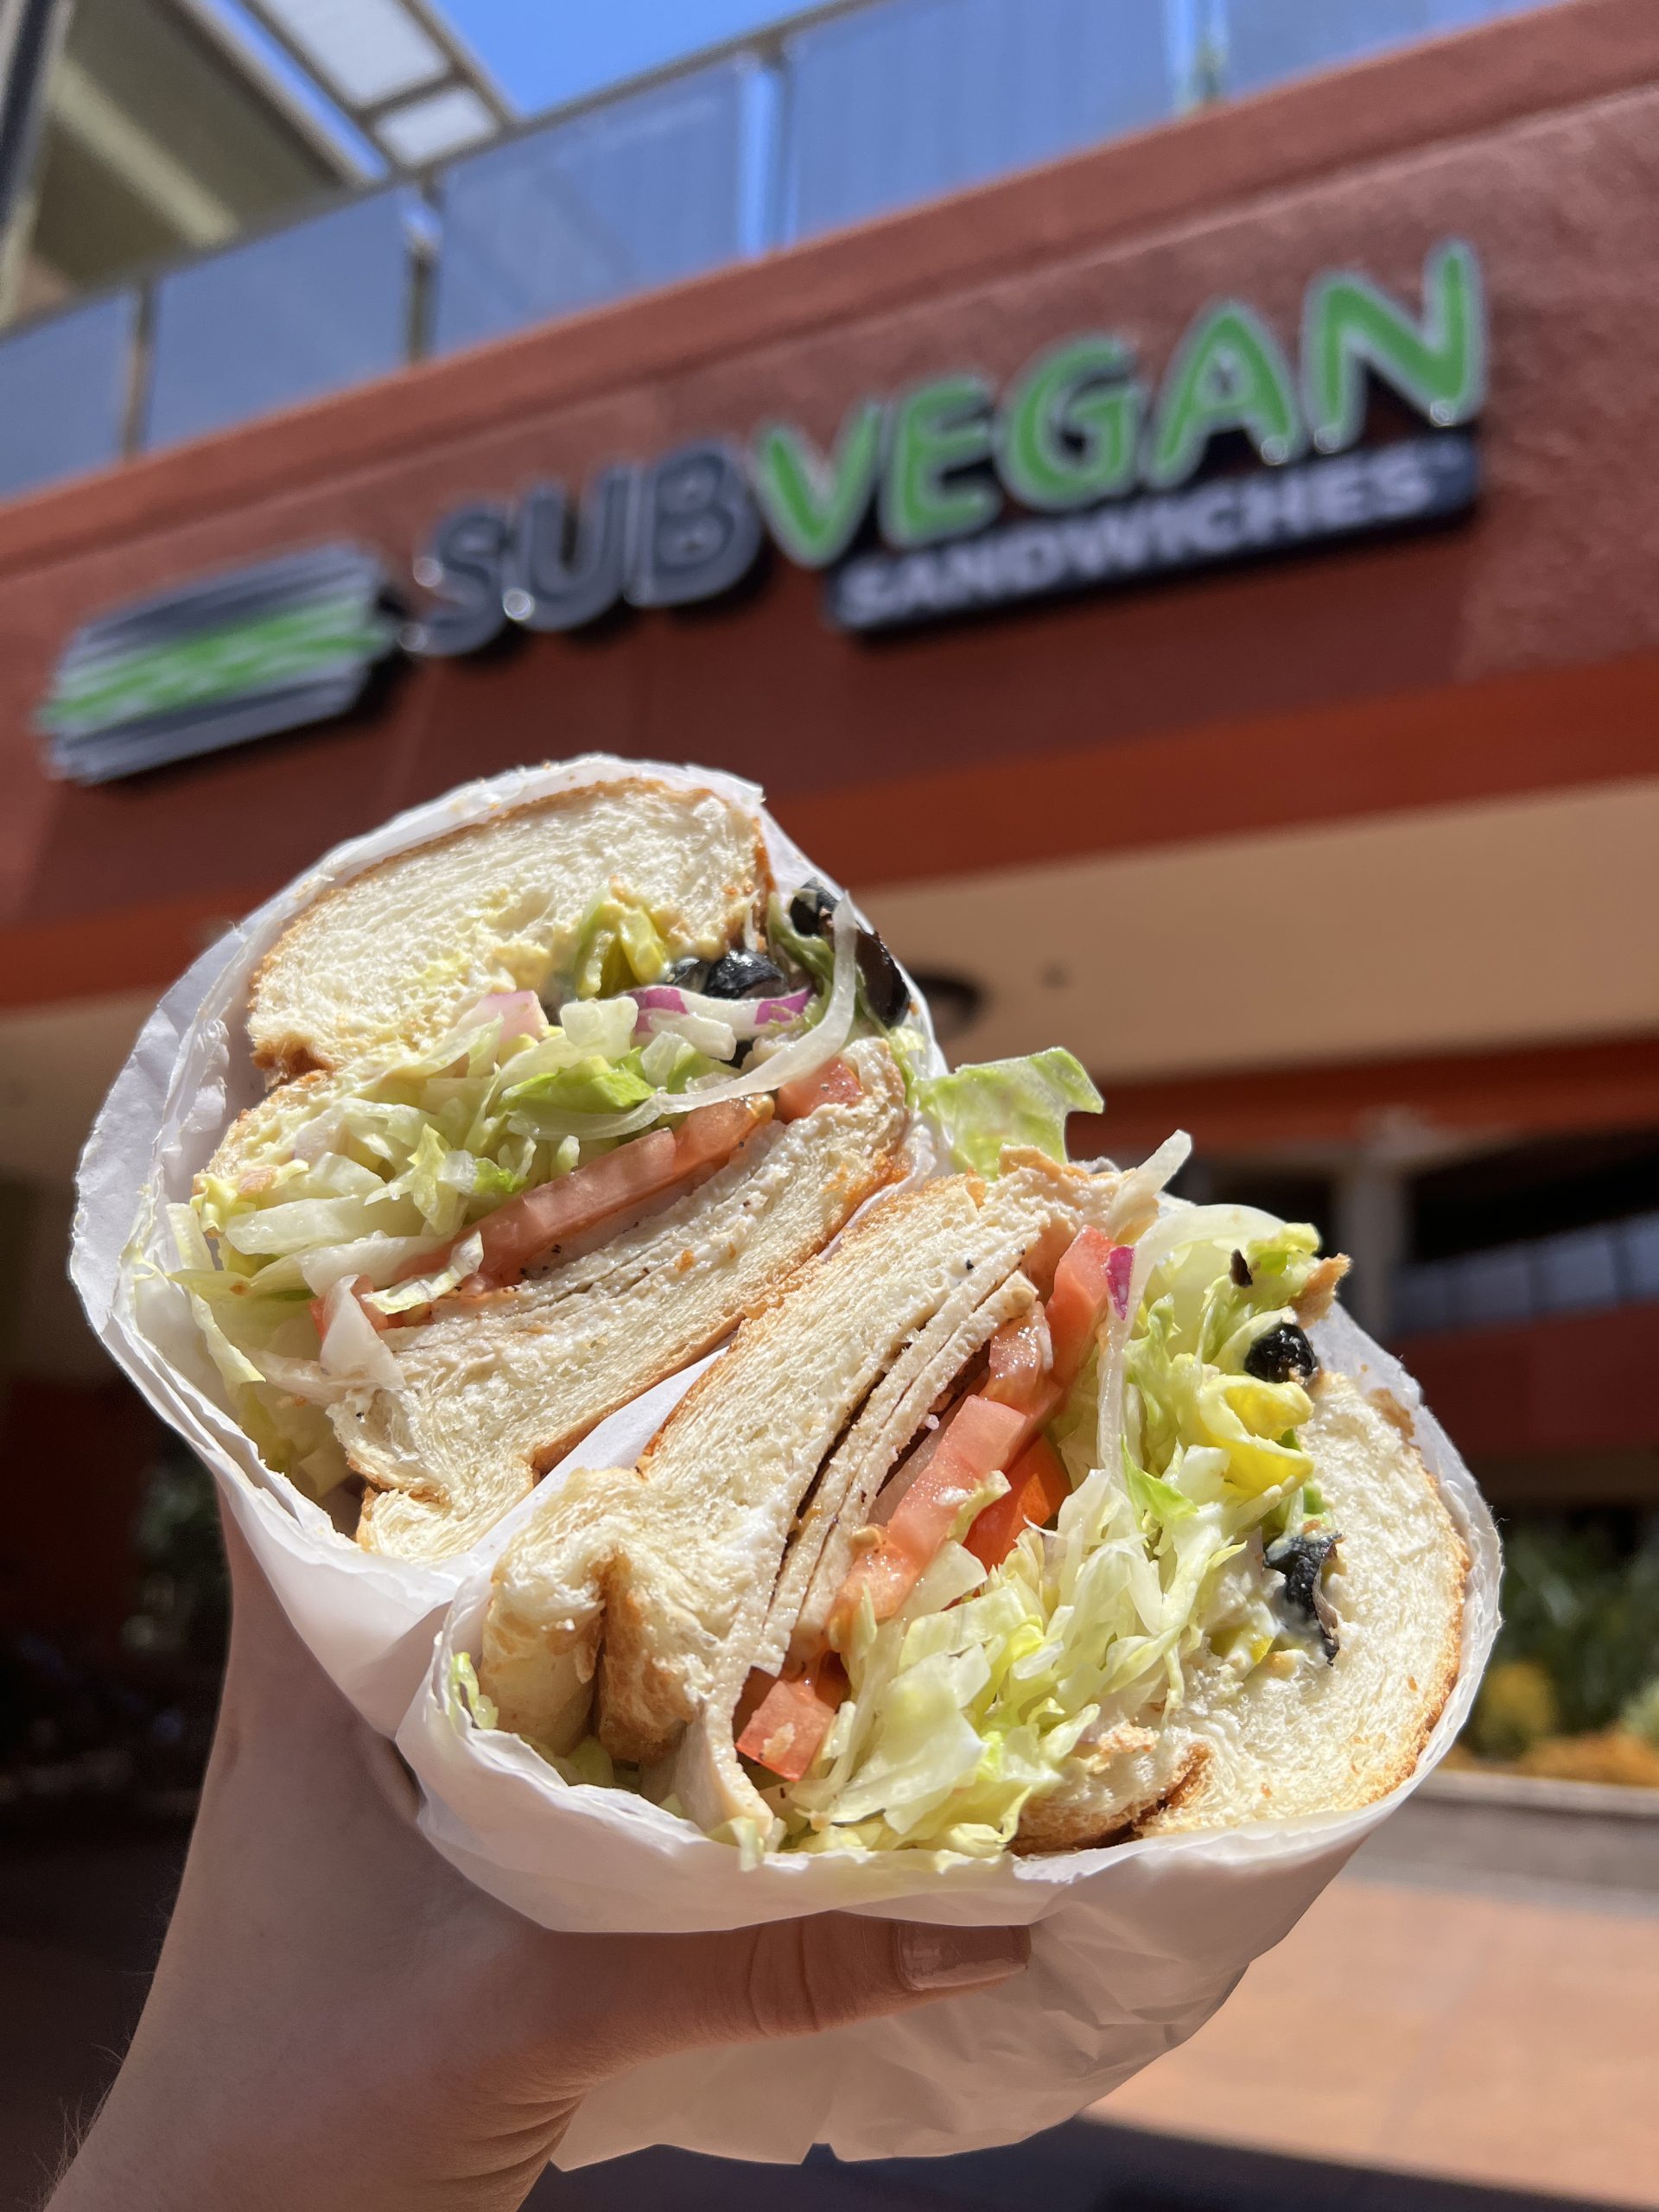 Sub Vegan Sandwiches